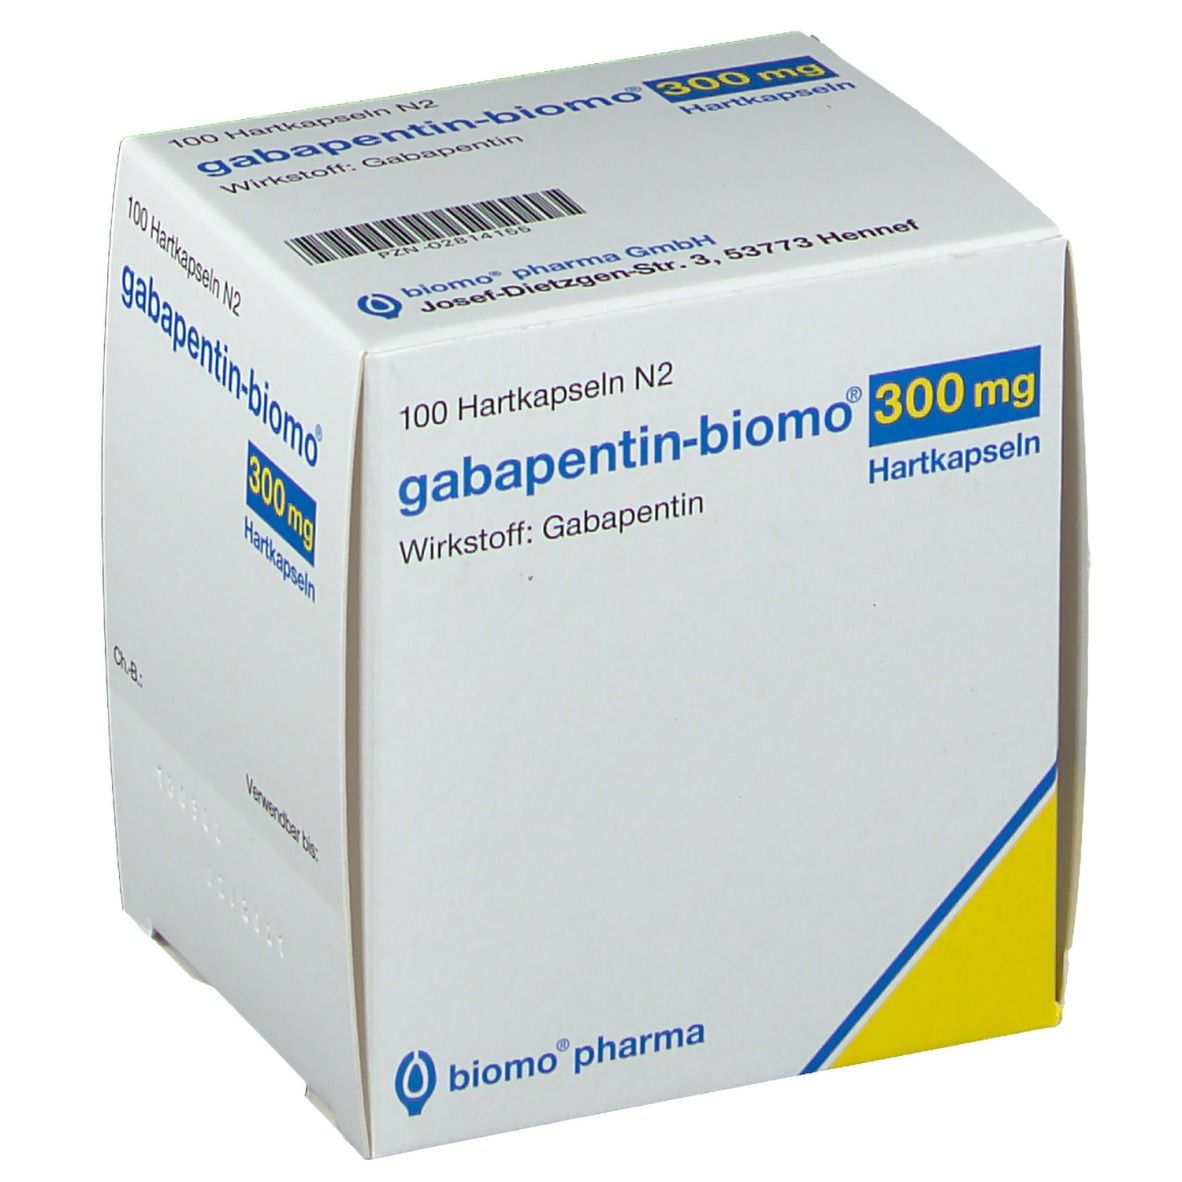 gabapentin-biomo® 300 mg